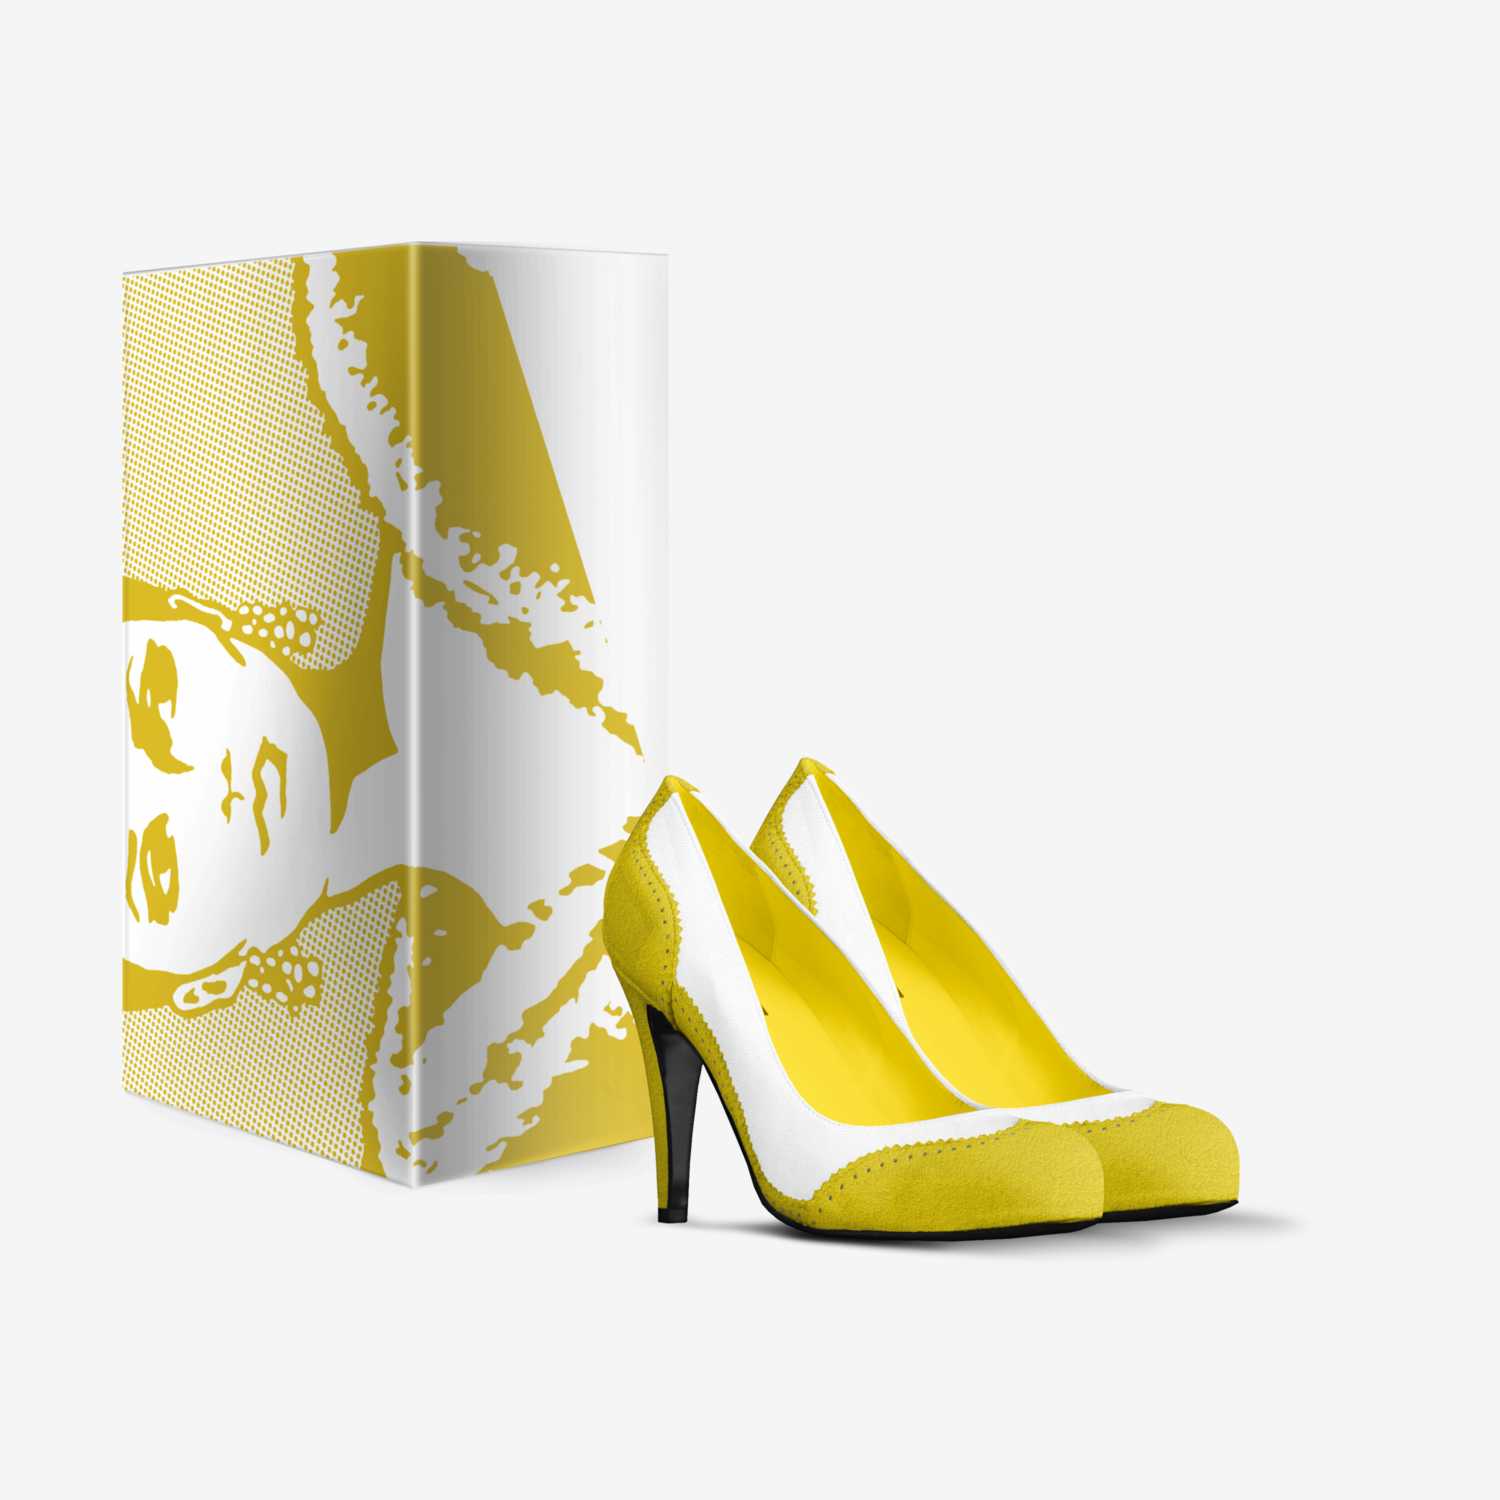 Daisy Mae | A Custom Shoe concept by Posh Pumps